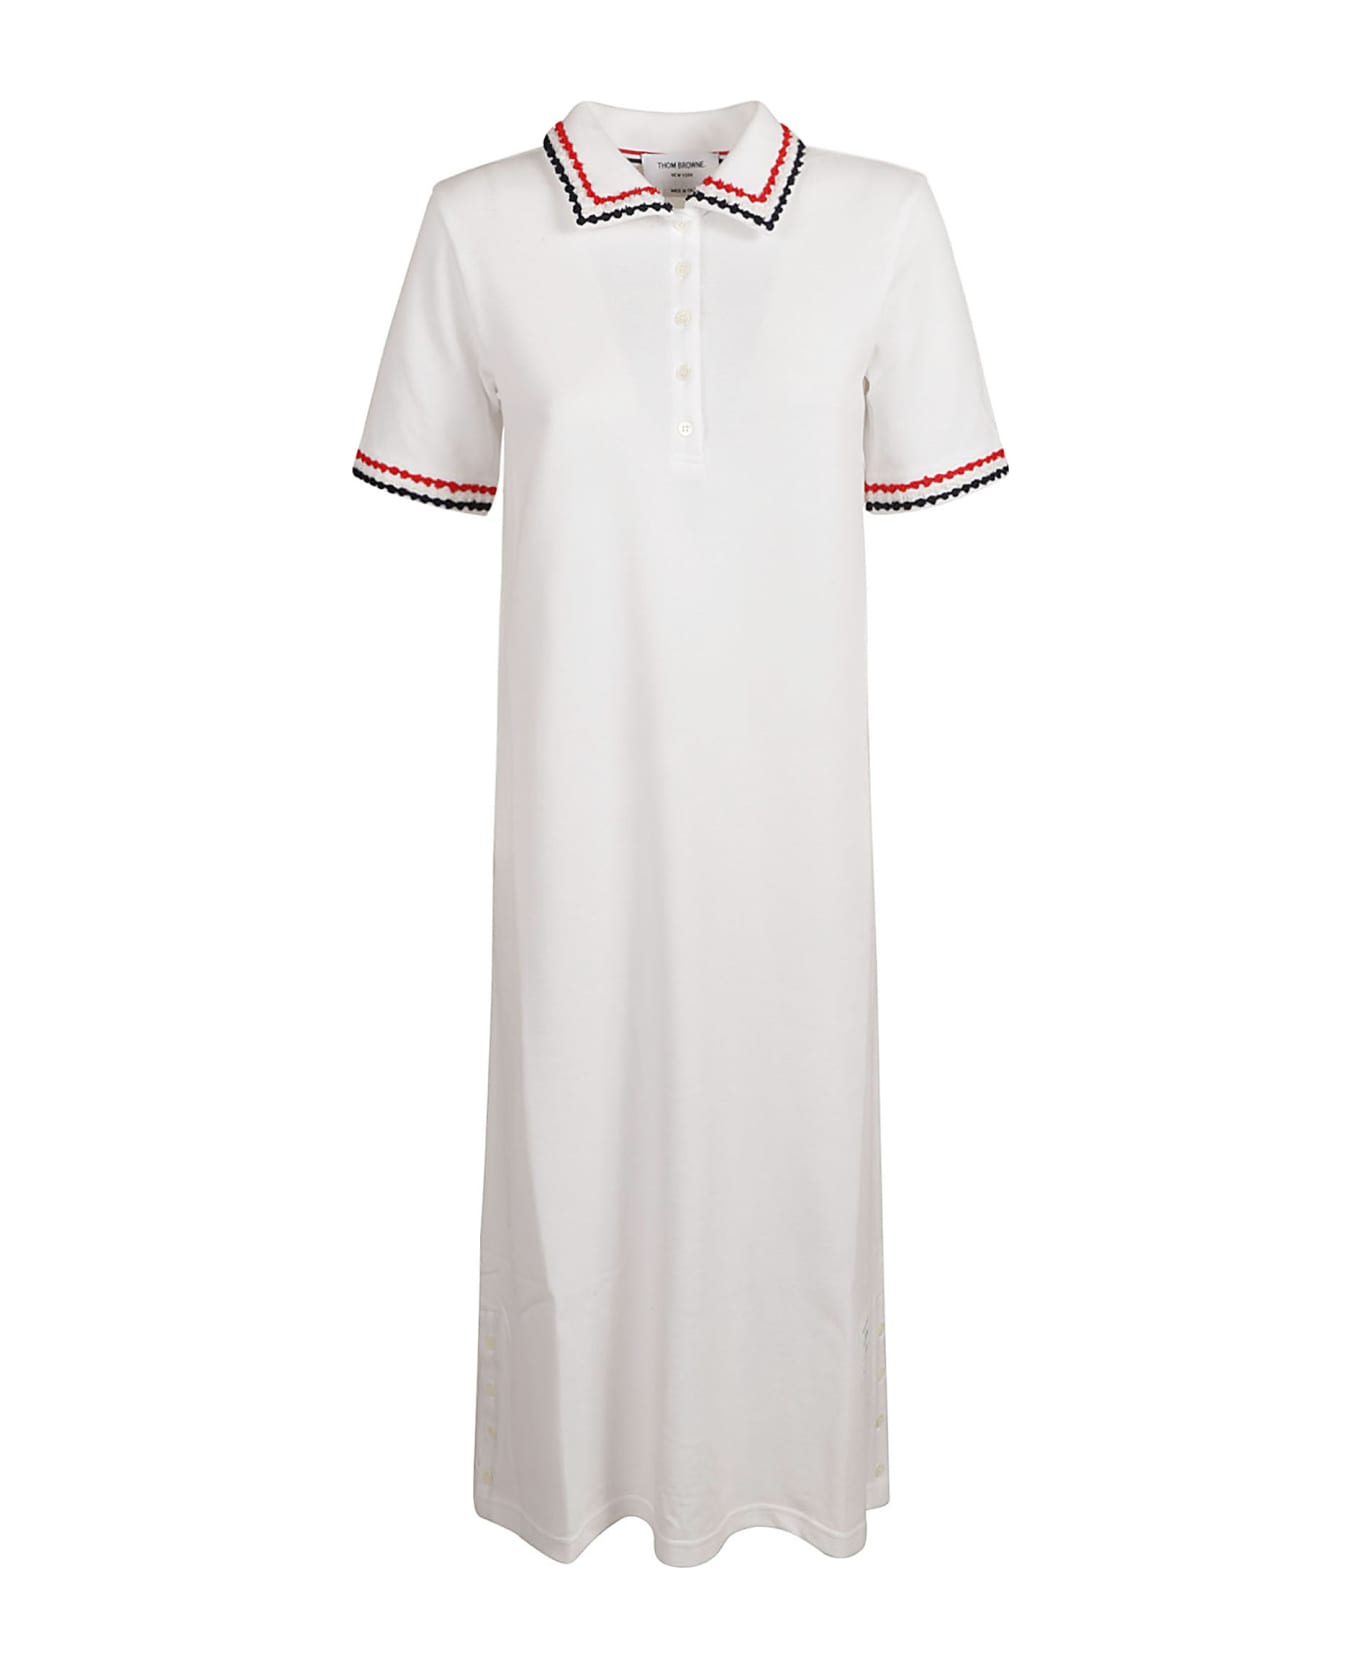 Thom Browne Calf Length Polo Dress - White/Black